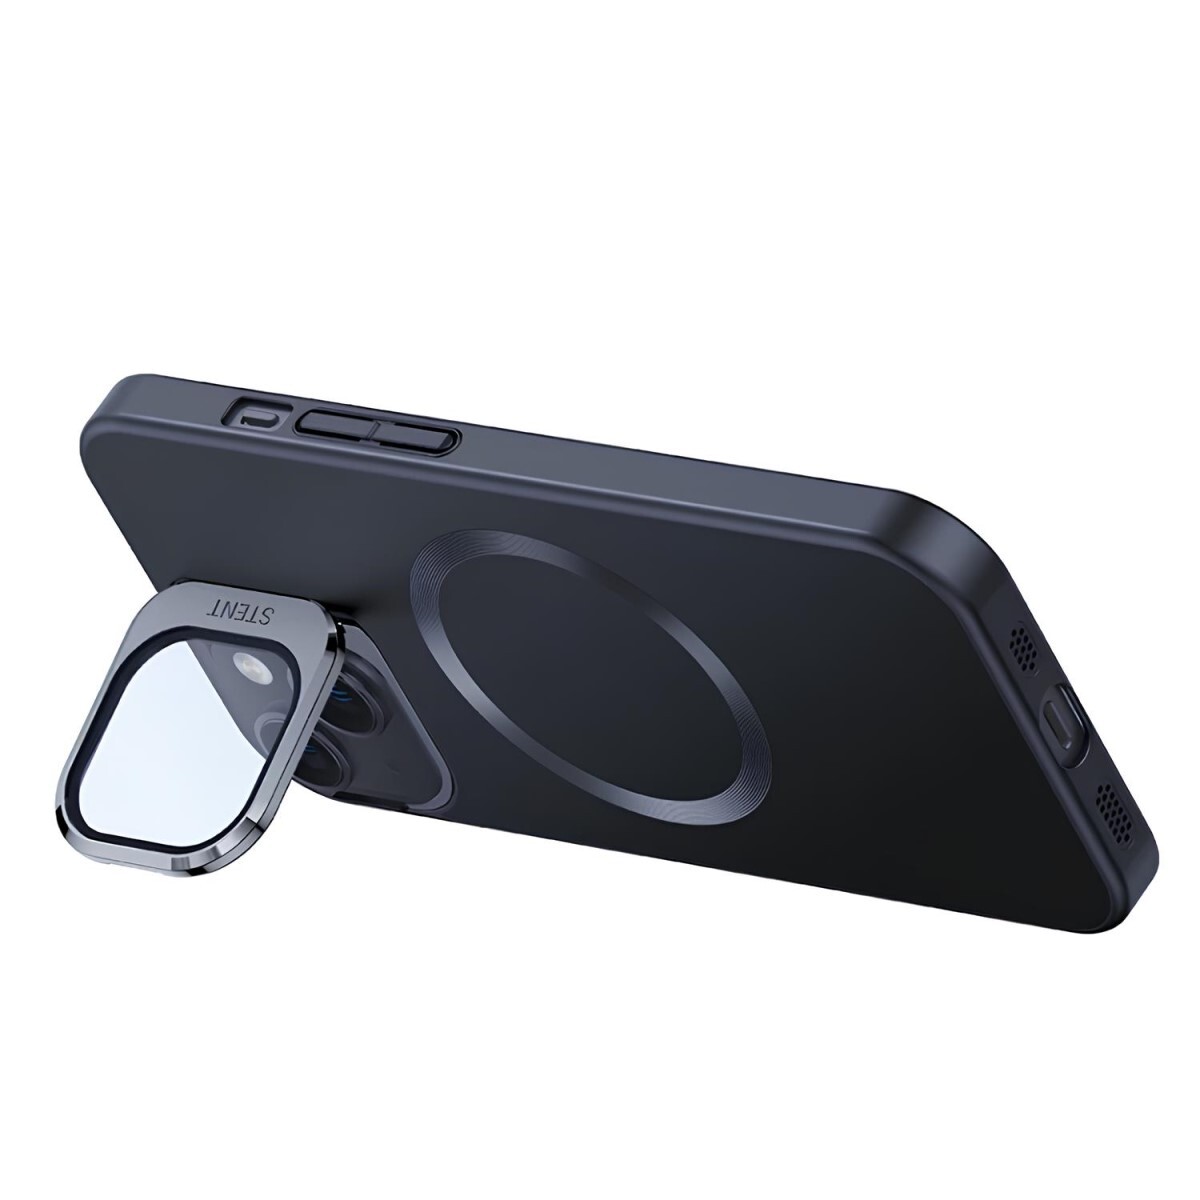 Protector Case Magnético para iPhone 15 USAMS GEYUE SERIES Azul